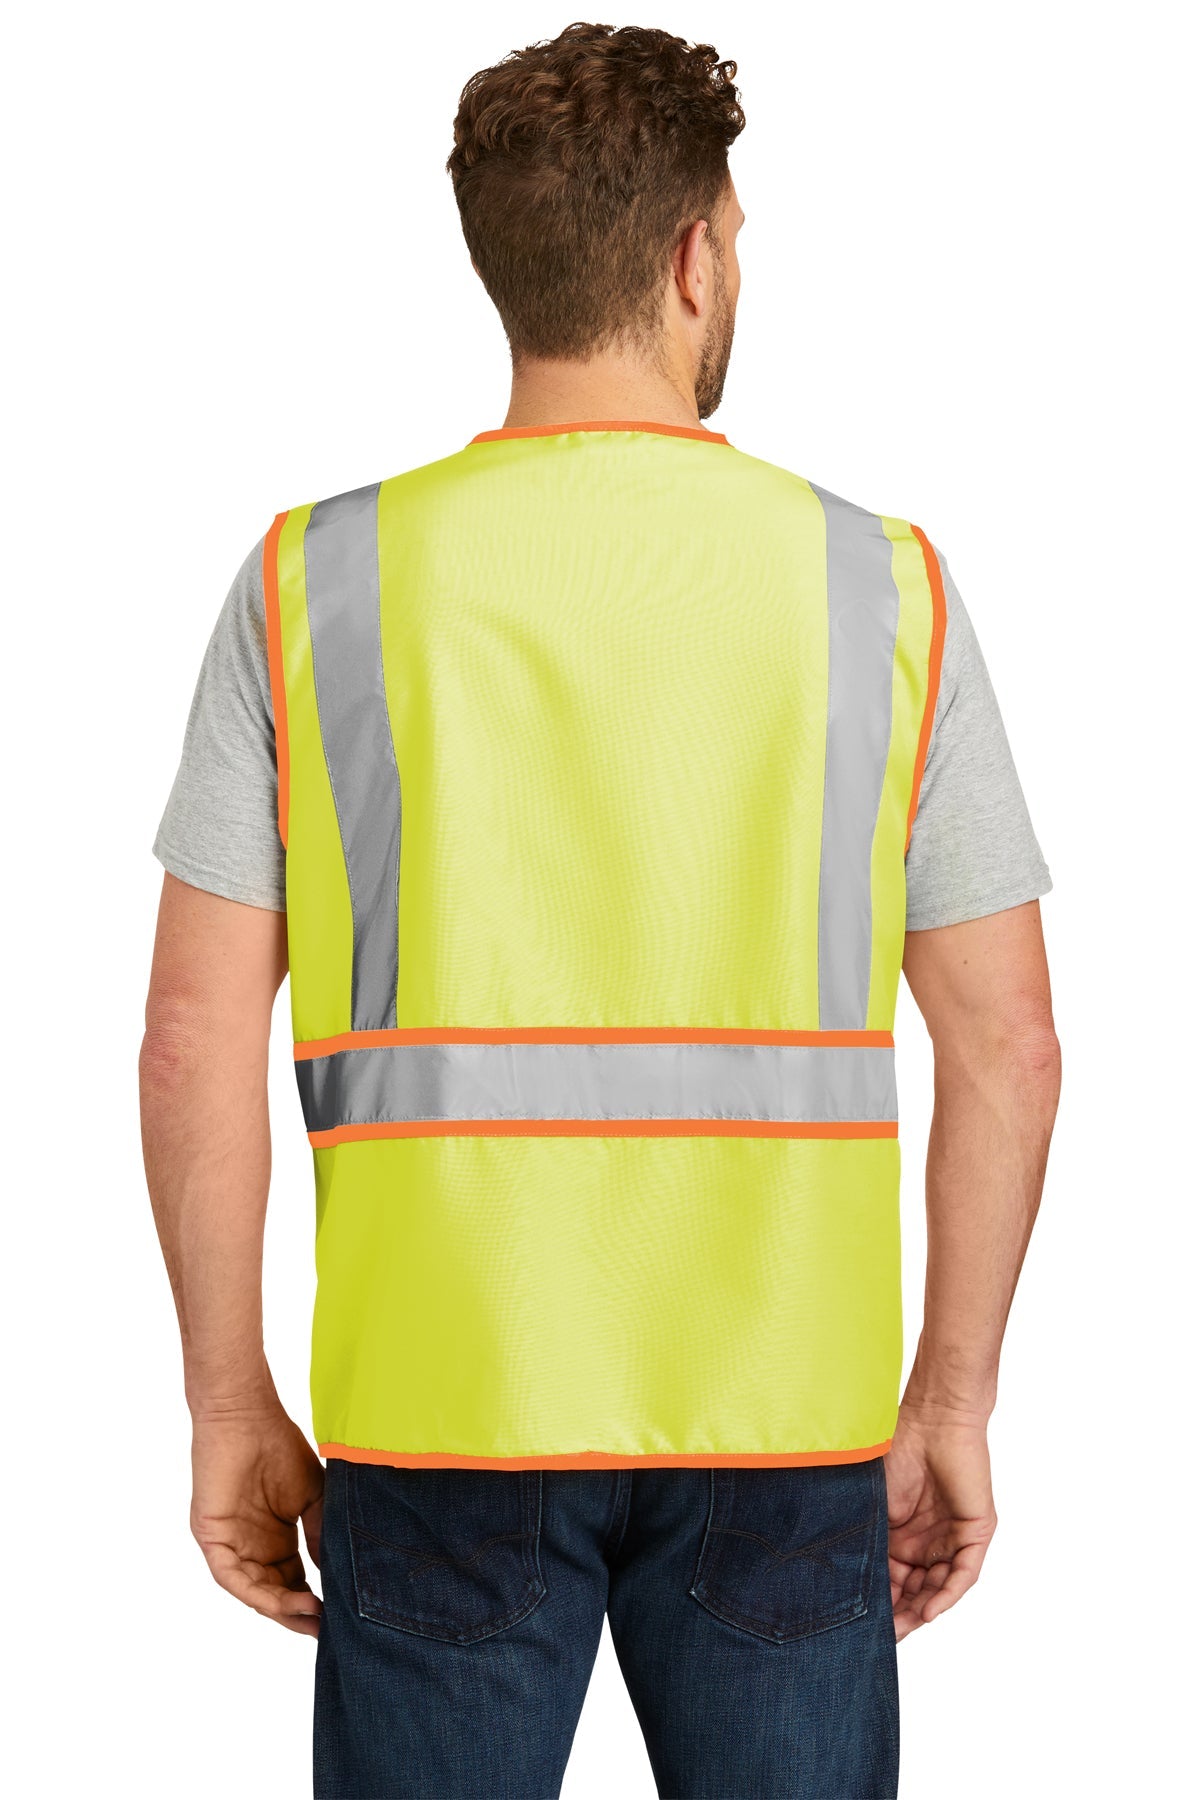 cornerstone_csv407 _safety yellow/safety orange_company_logo_jackets